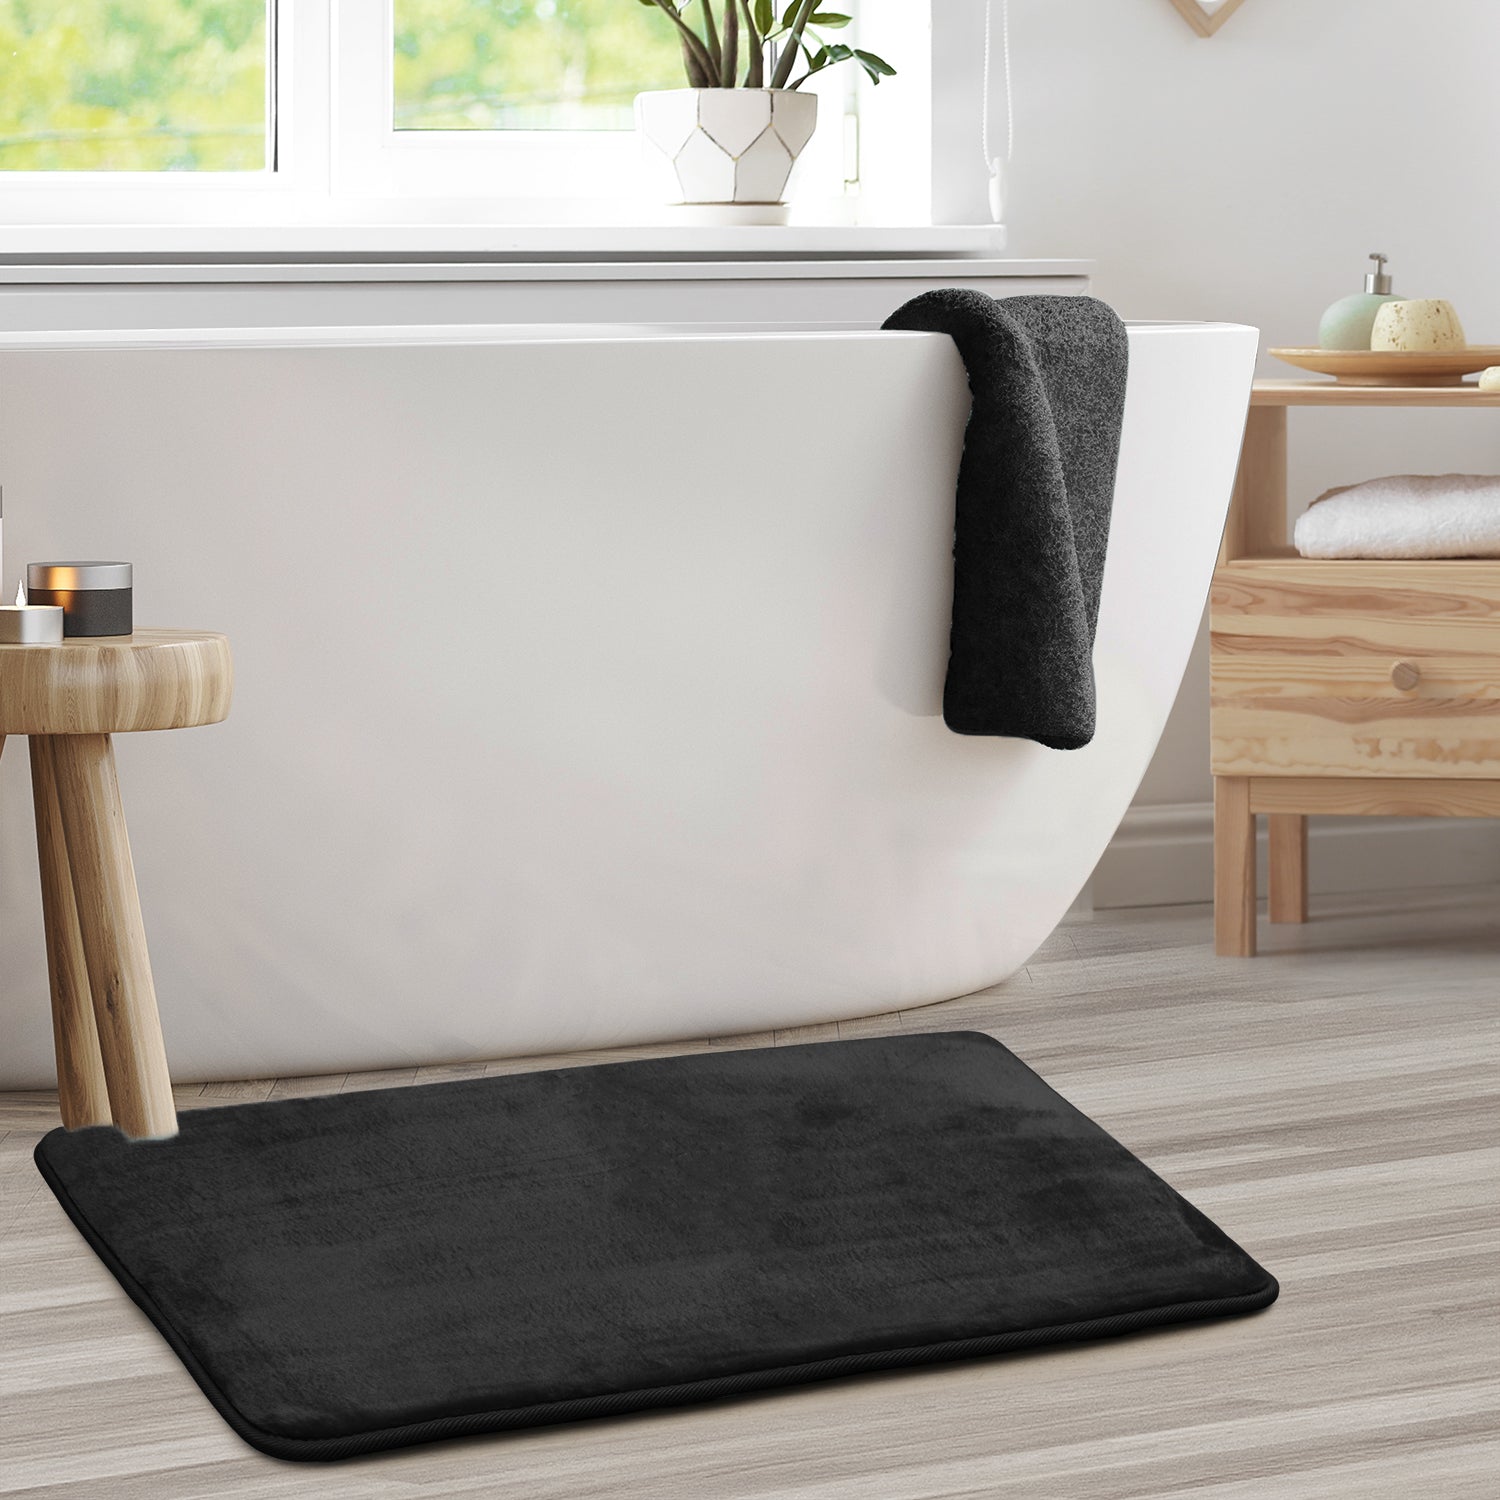 Clara Clark Bathroom Rugs Sets 3 Piece, Velvet Memory Foam Bath Mat -  Non-Slip